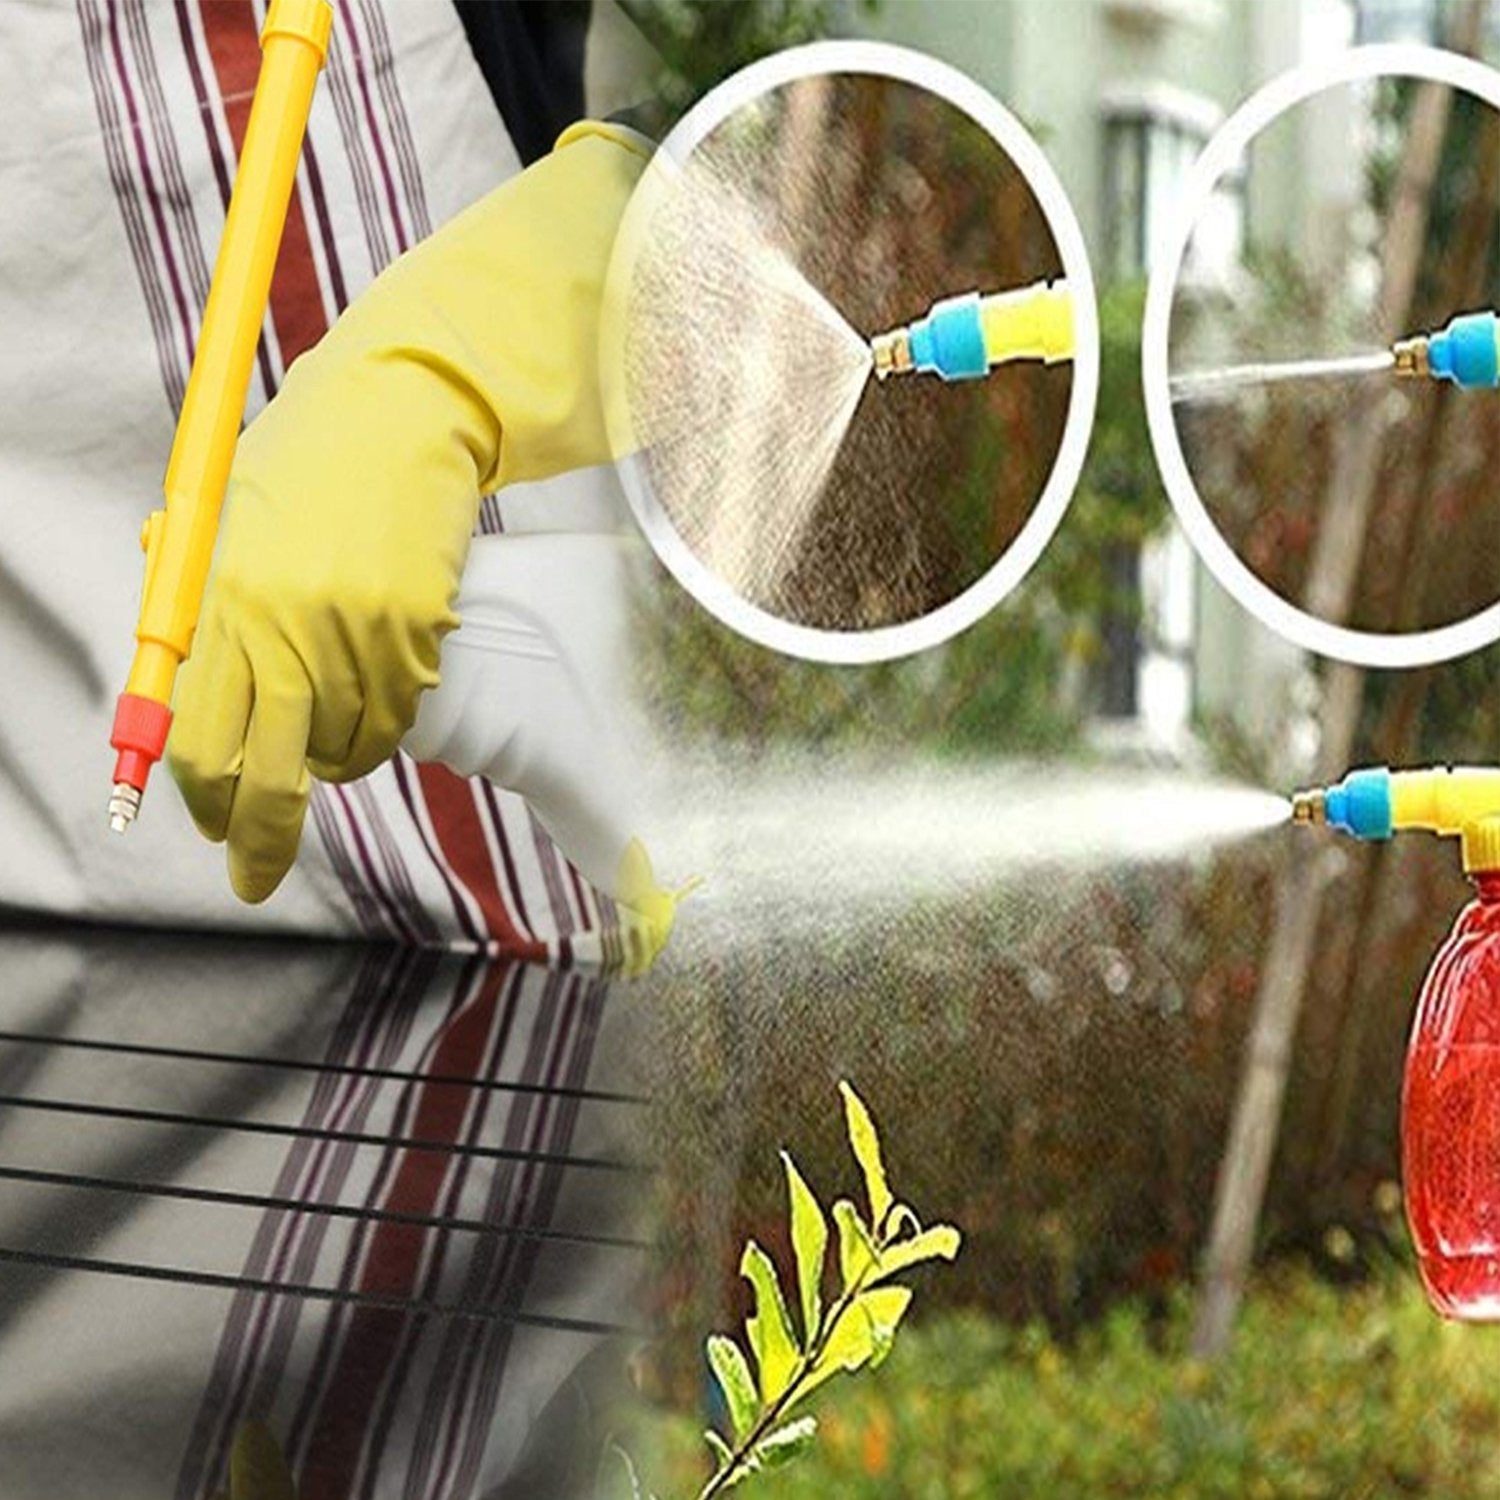 ambitionofcreativity in gardening tools bottle sprayer for plants garden pesticide car wash with adjustable brass nozzle sprayer handheld pump